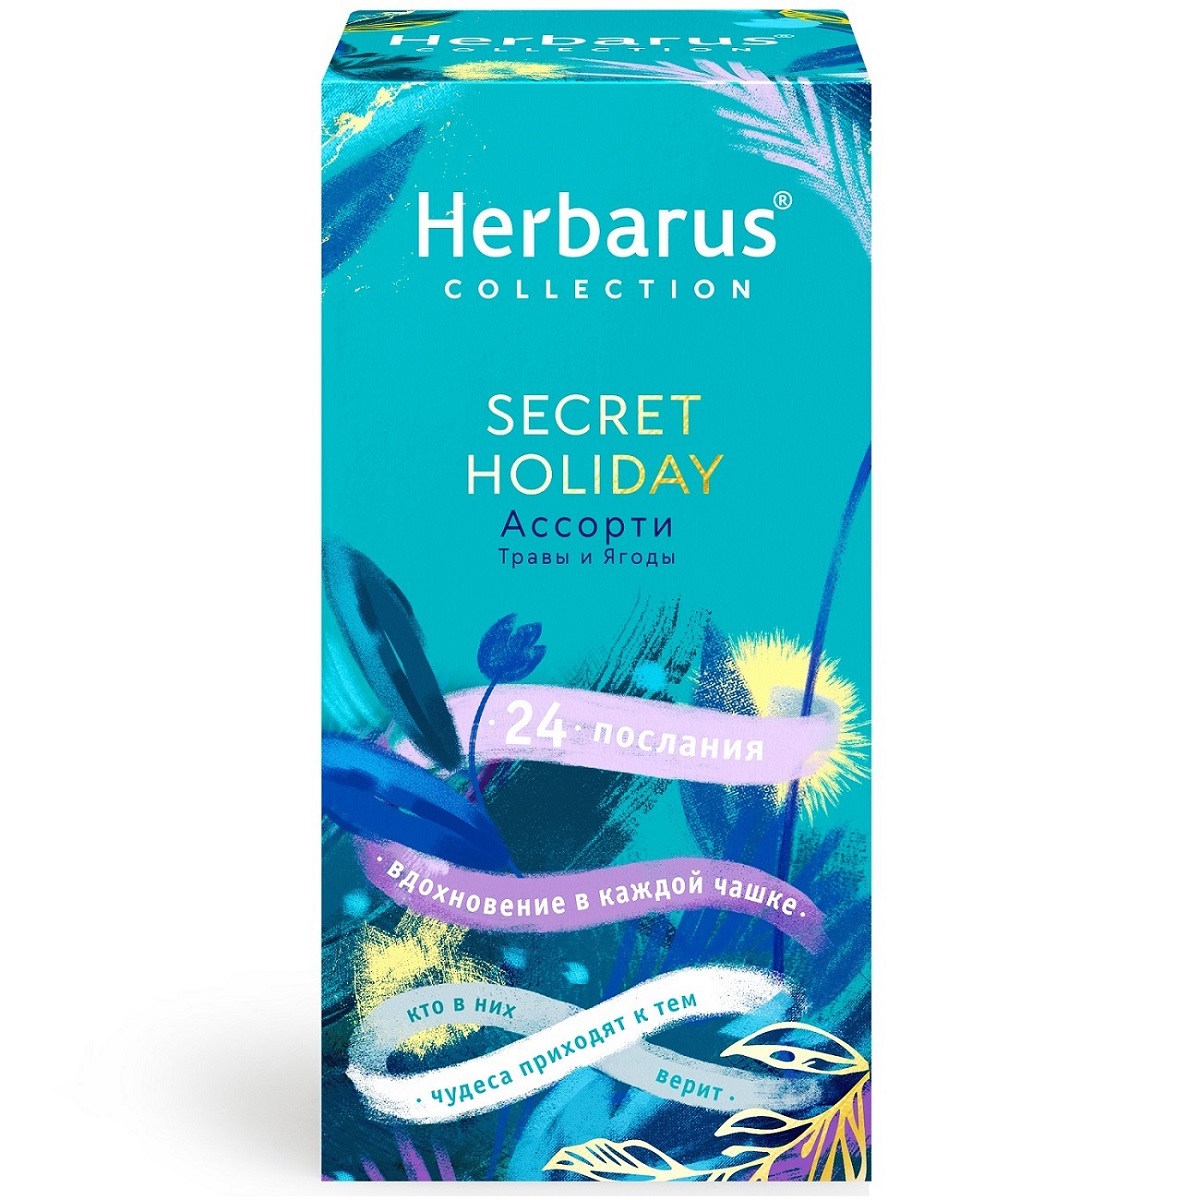 Herbarus Чайный напиток ассорти Secret Holiday, 24 пакетика (Herbarus, Травы и ягоды) чайный напиток herbarus ассорти 24 пакетика